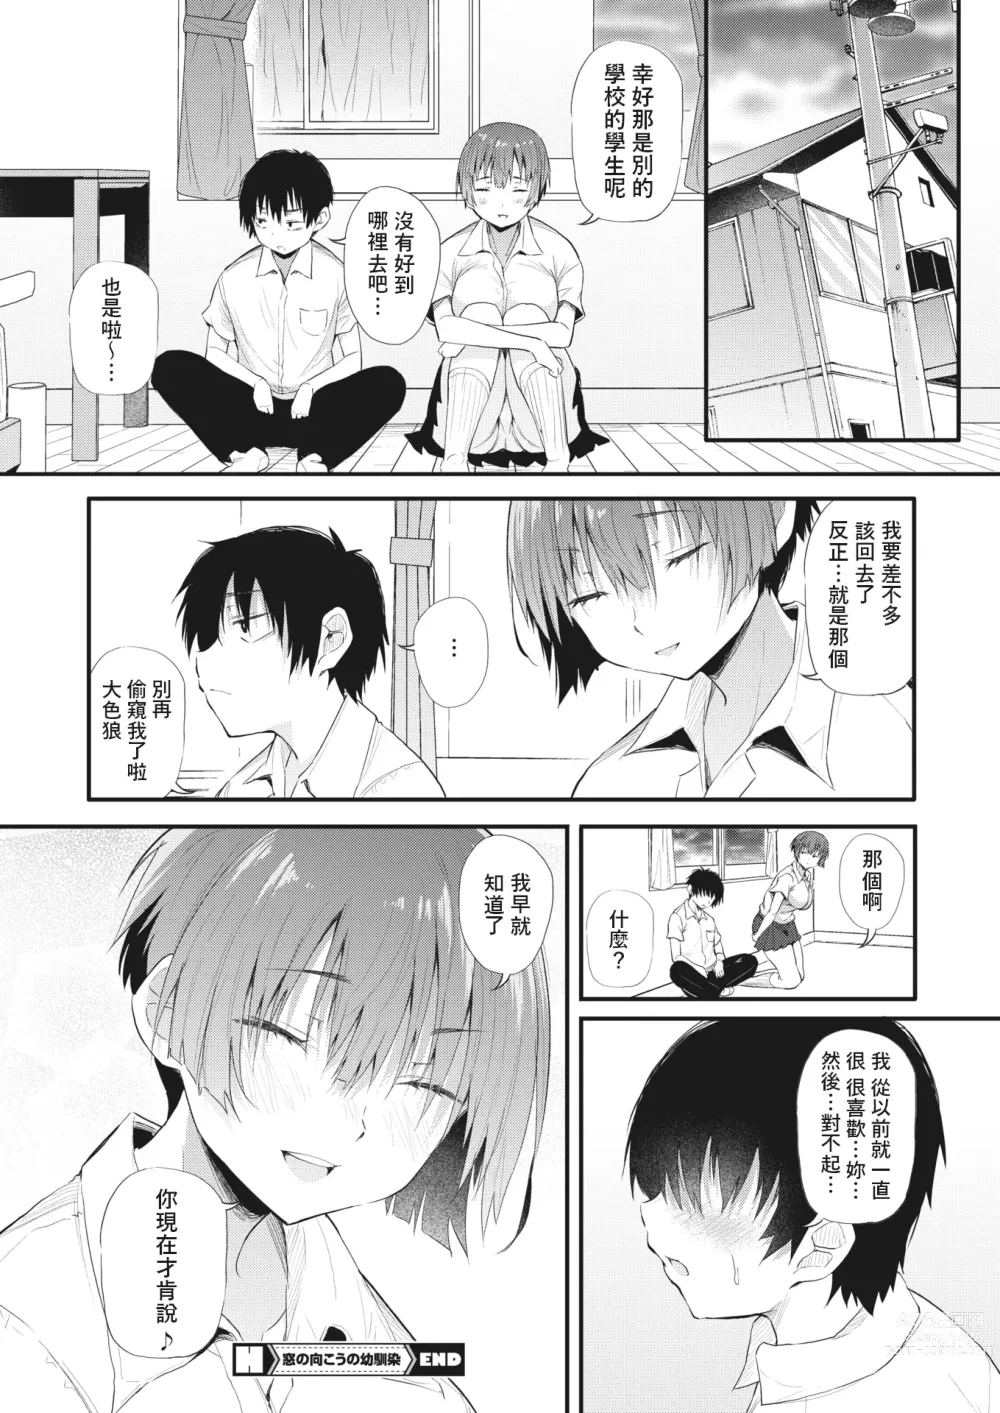 Page 26 of manga Mado no Mukou no Osananajimi